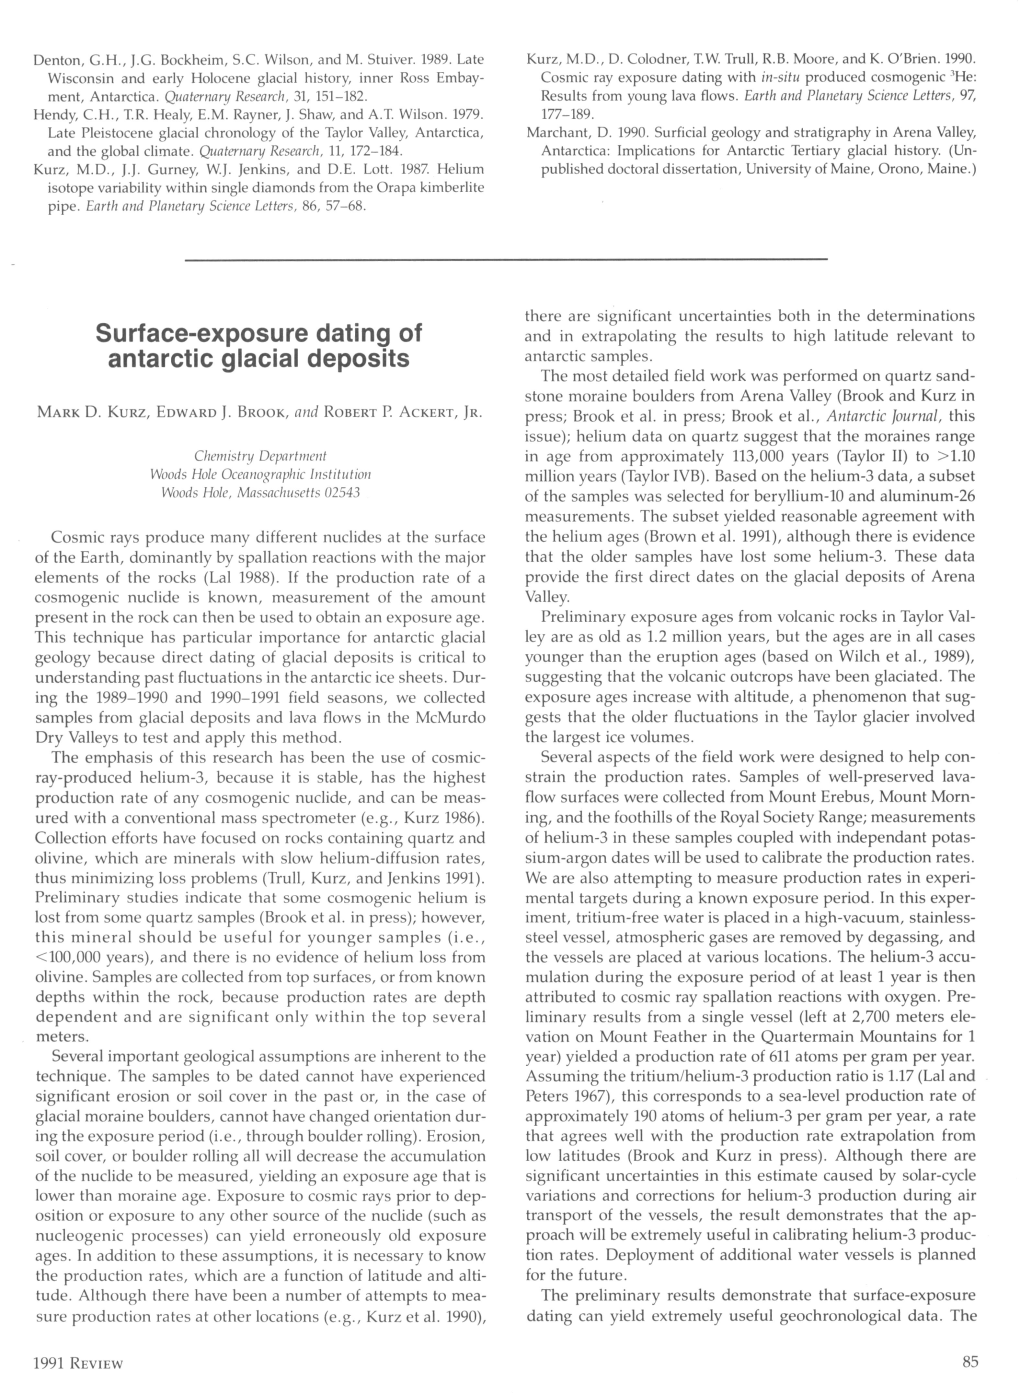 Surface-Exposure Dating of Antarctic Glacial Deposits